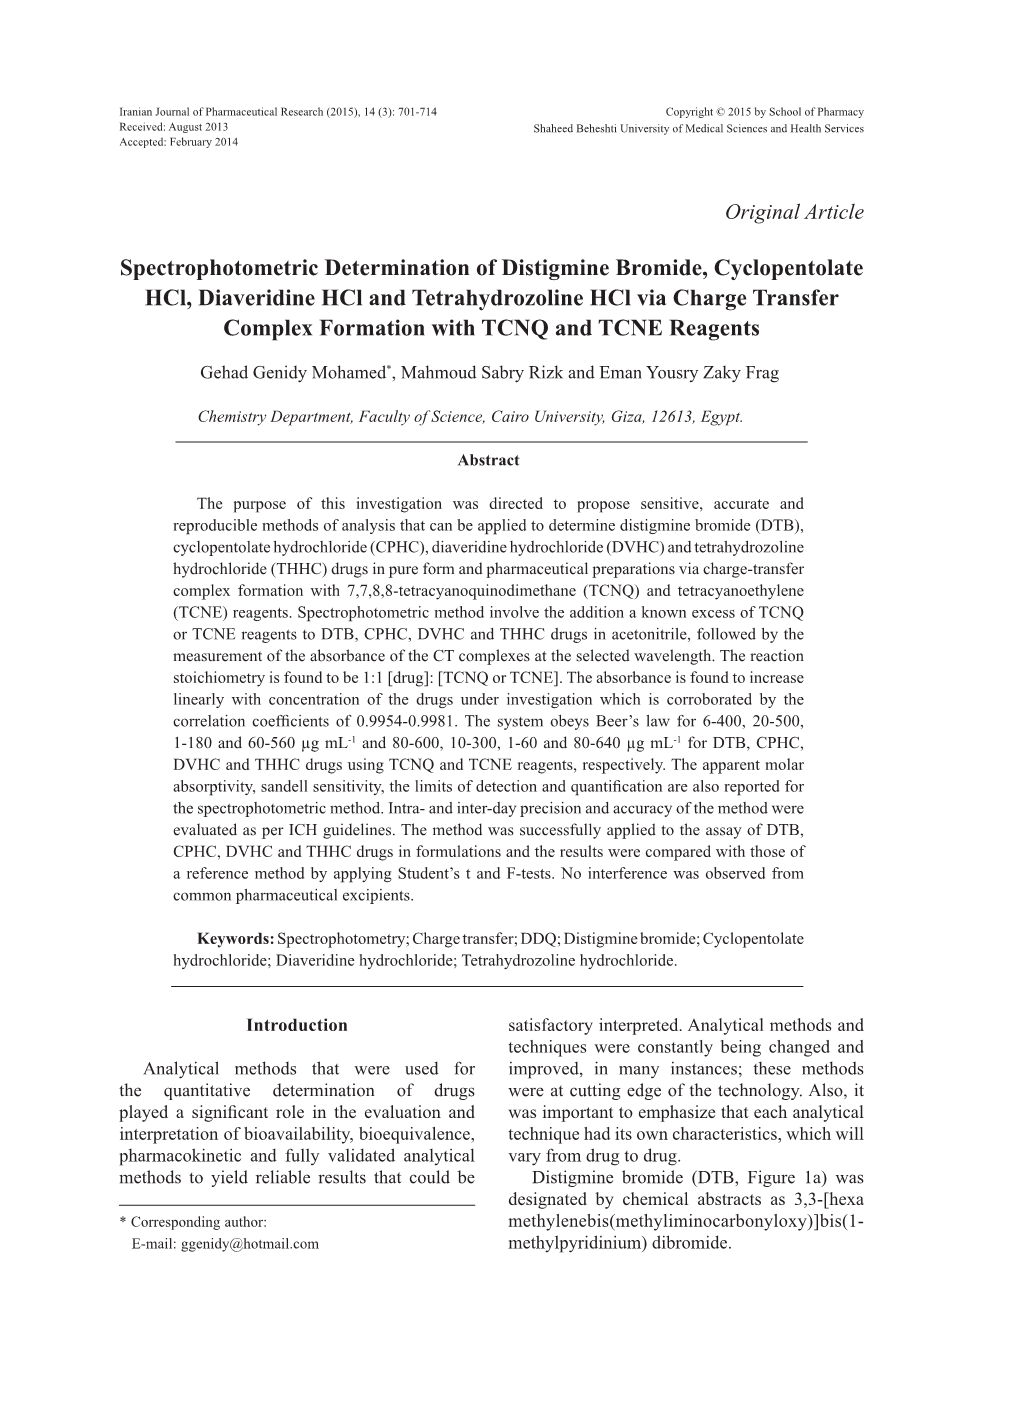 Spectrophotometric Determination of Distigmine Bromide, Cyclopentolate